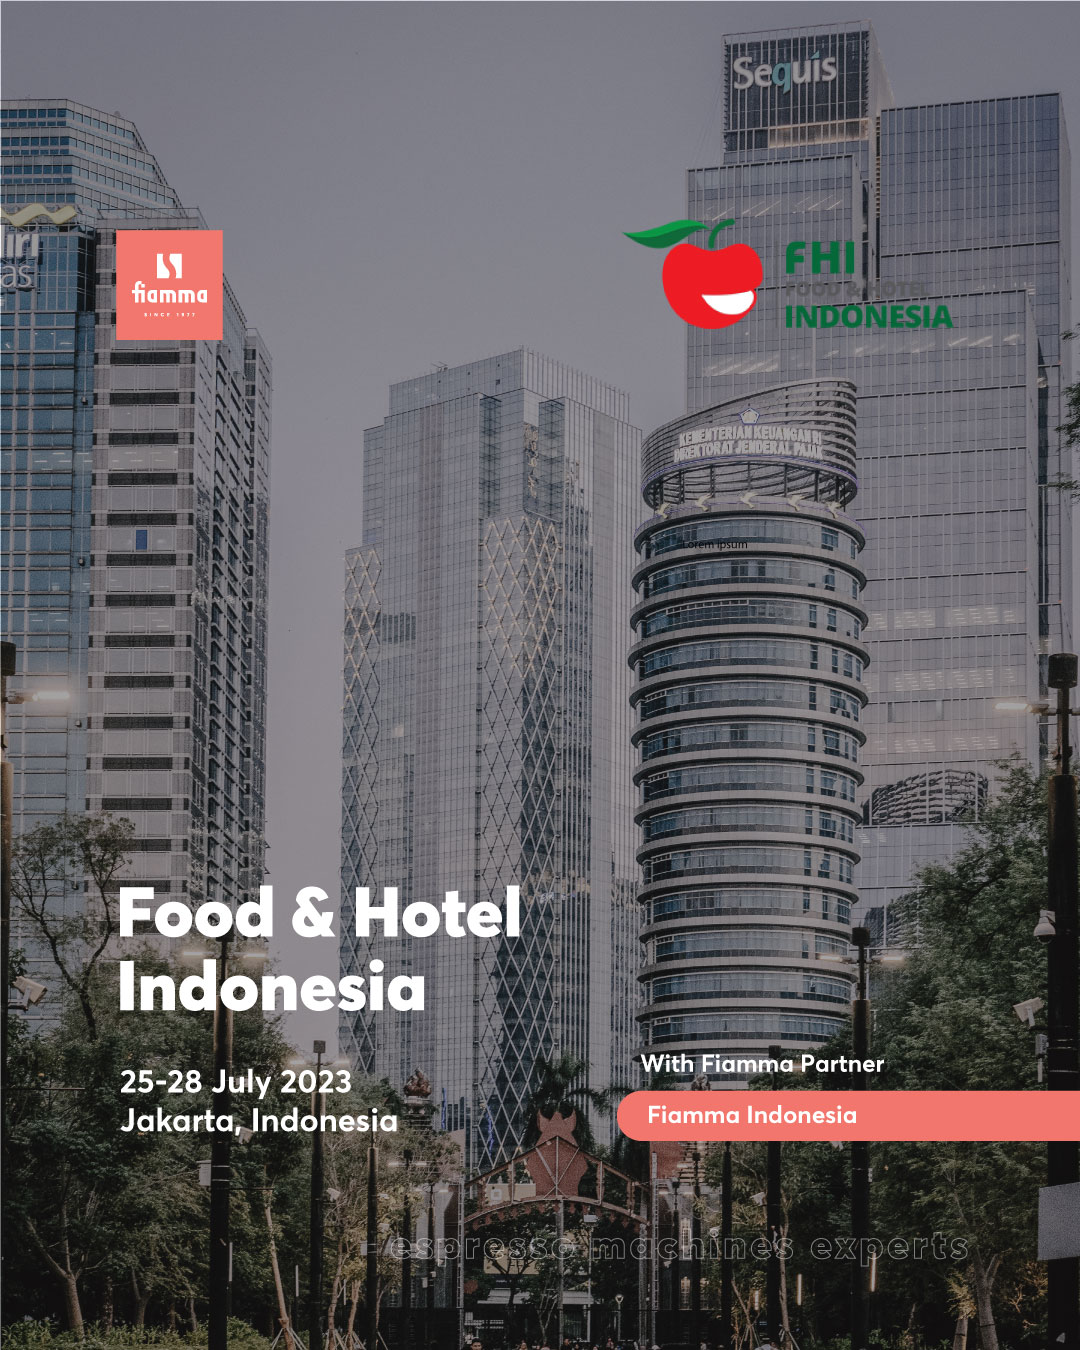 Fiamma at Food & Hotel Indonesia 2023